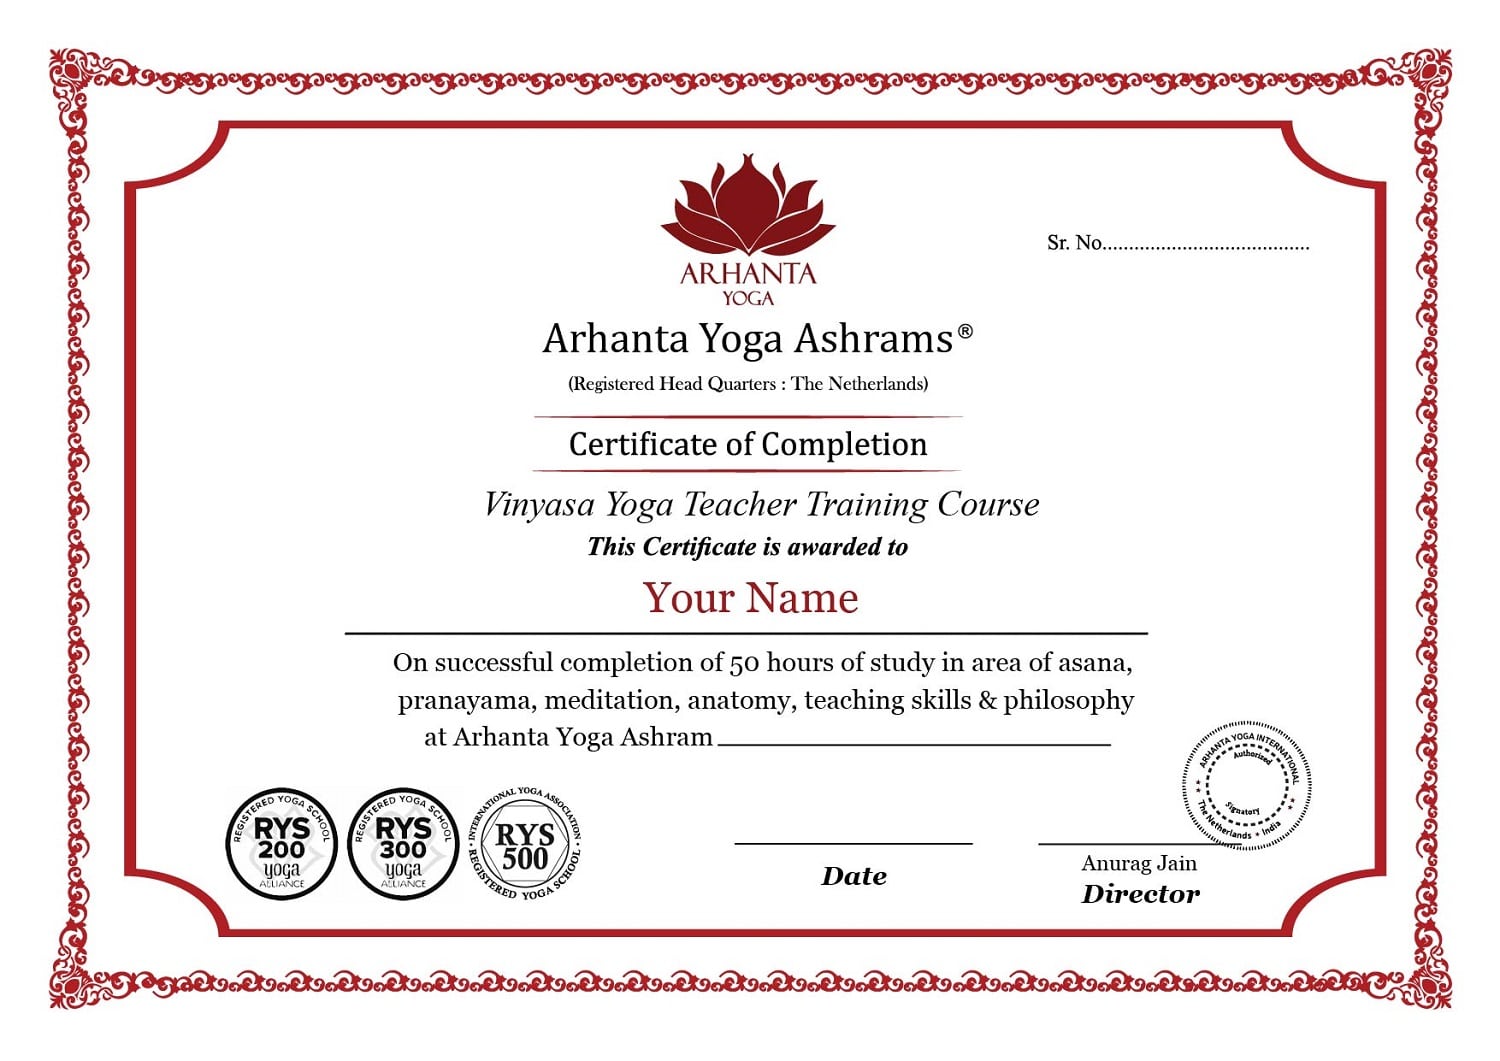 Certificado de formación de profesores de vinyasa yoga